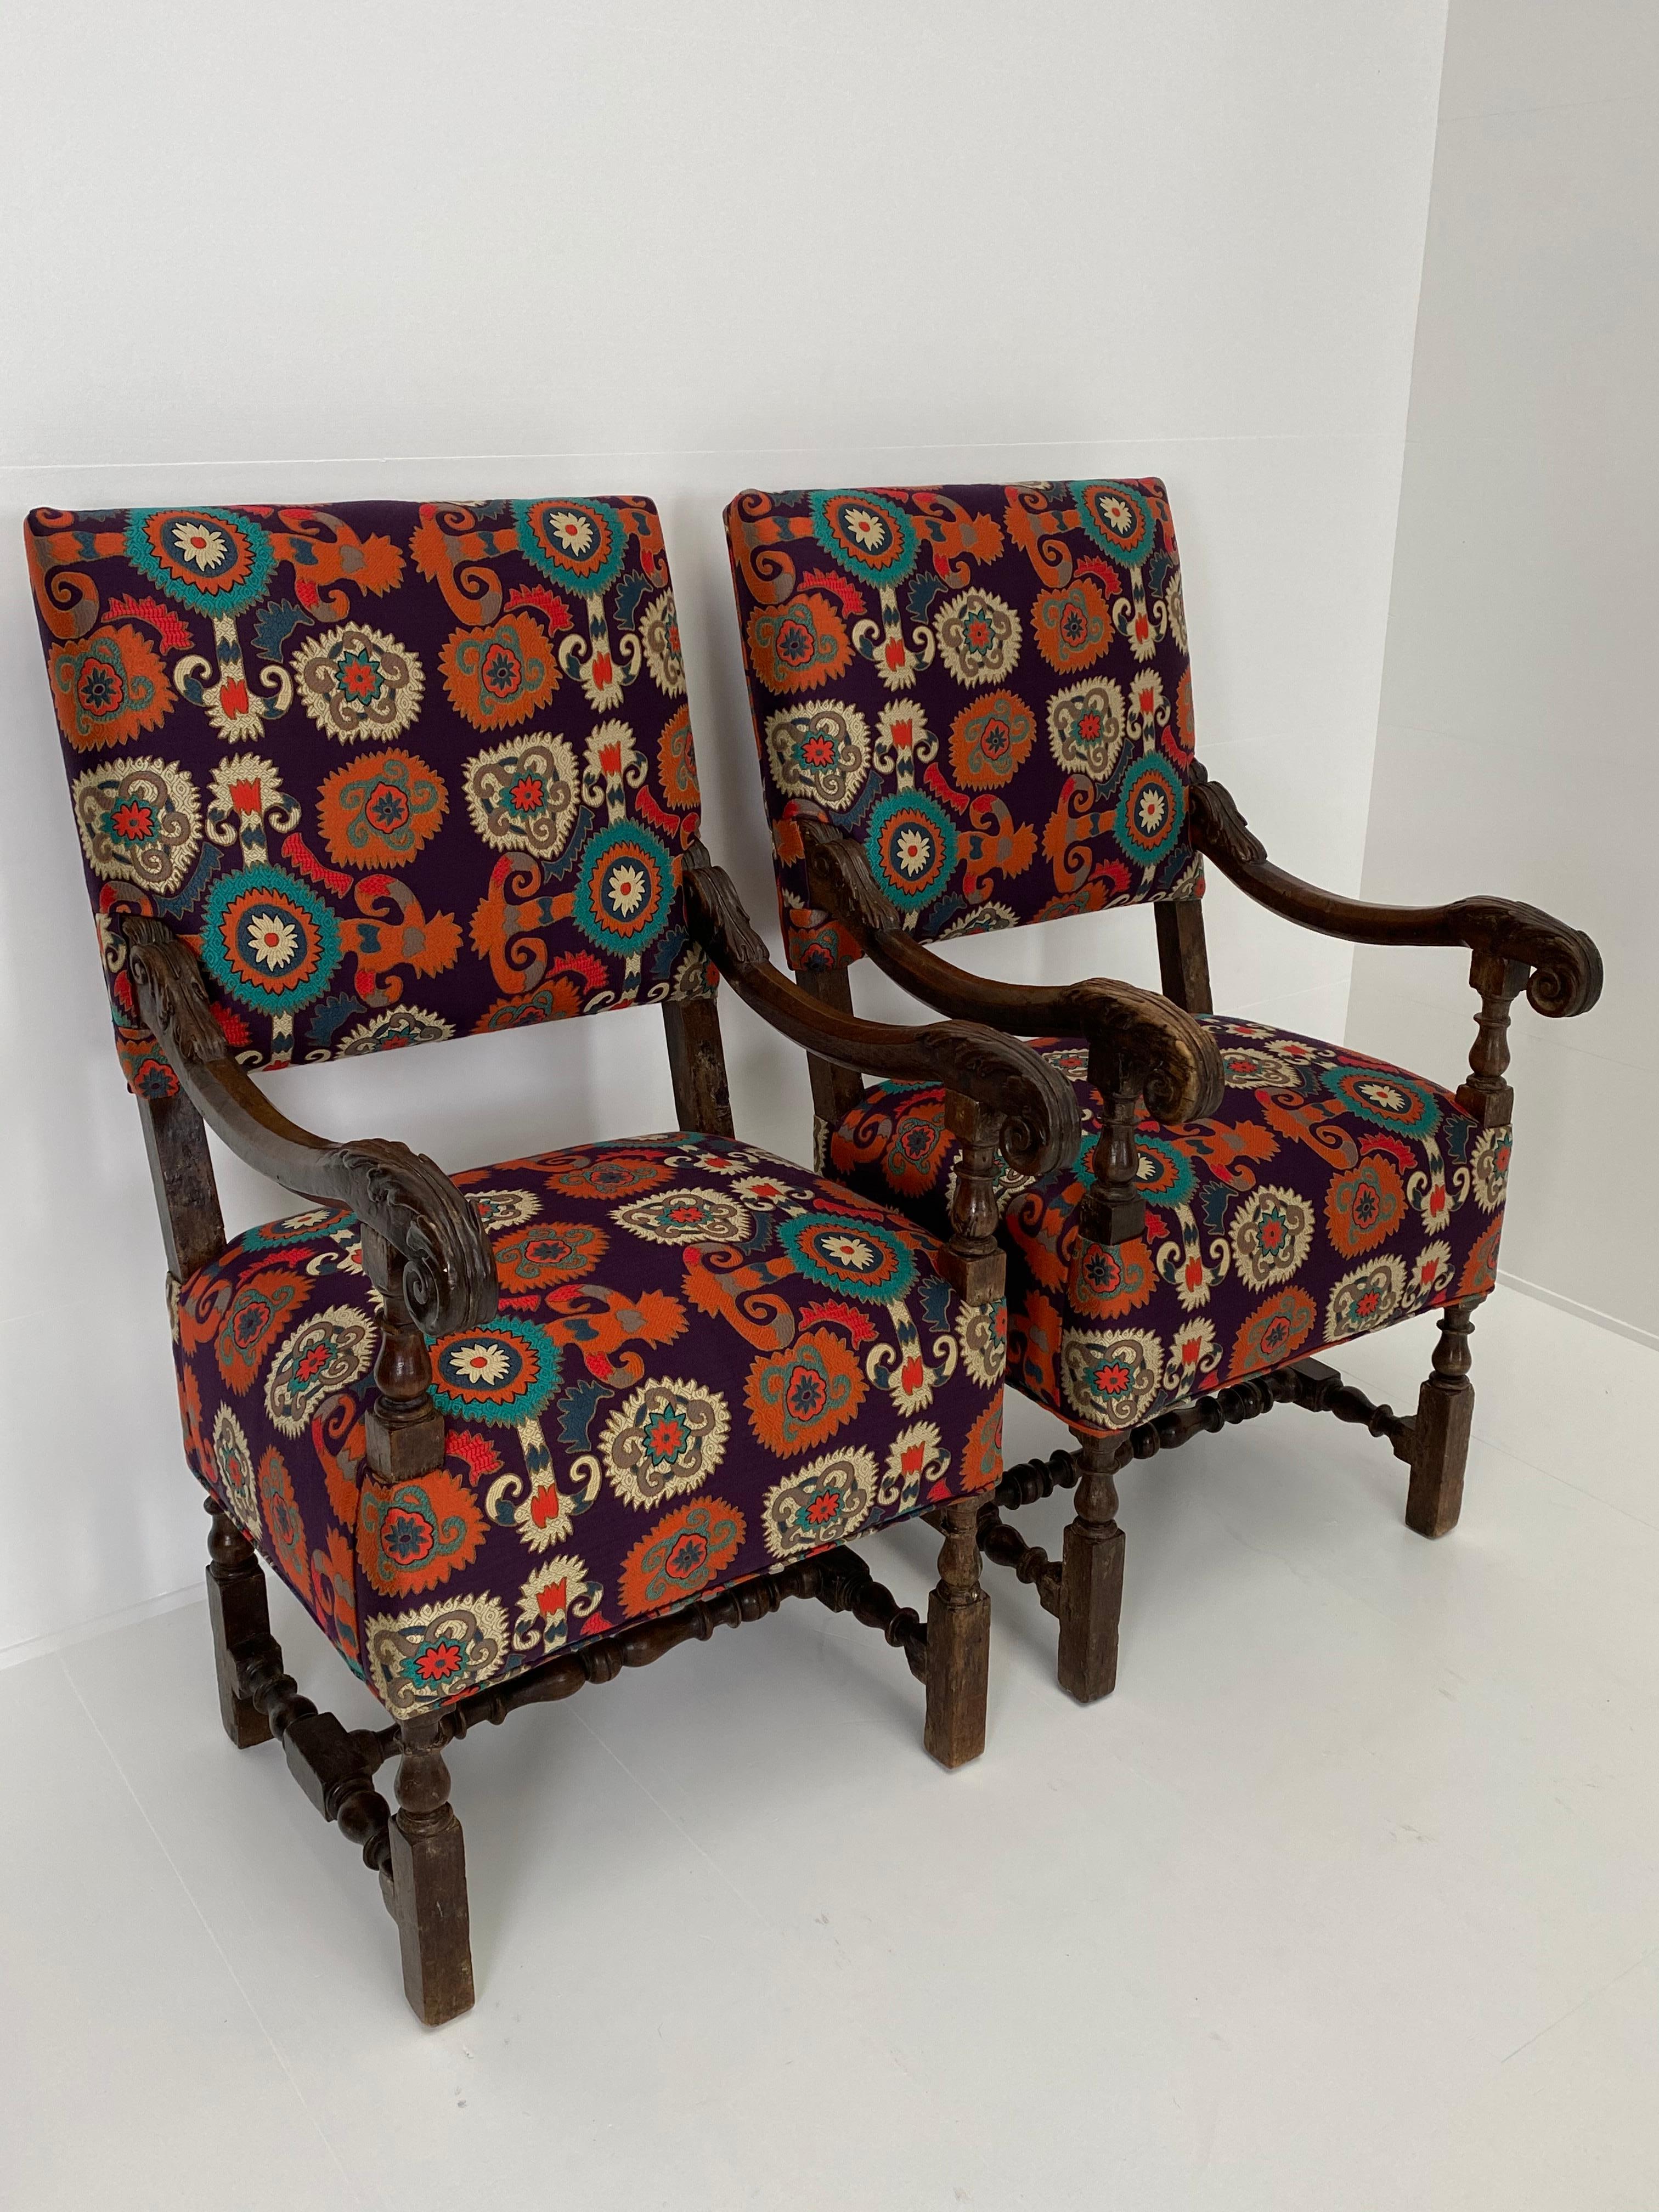 Nice pair of Italian walnut chairs, 18th century
with new Italian Etro fabric.